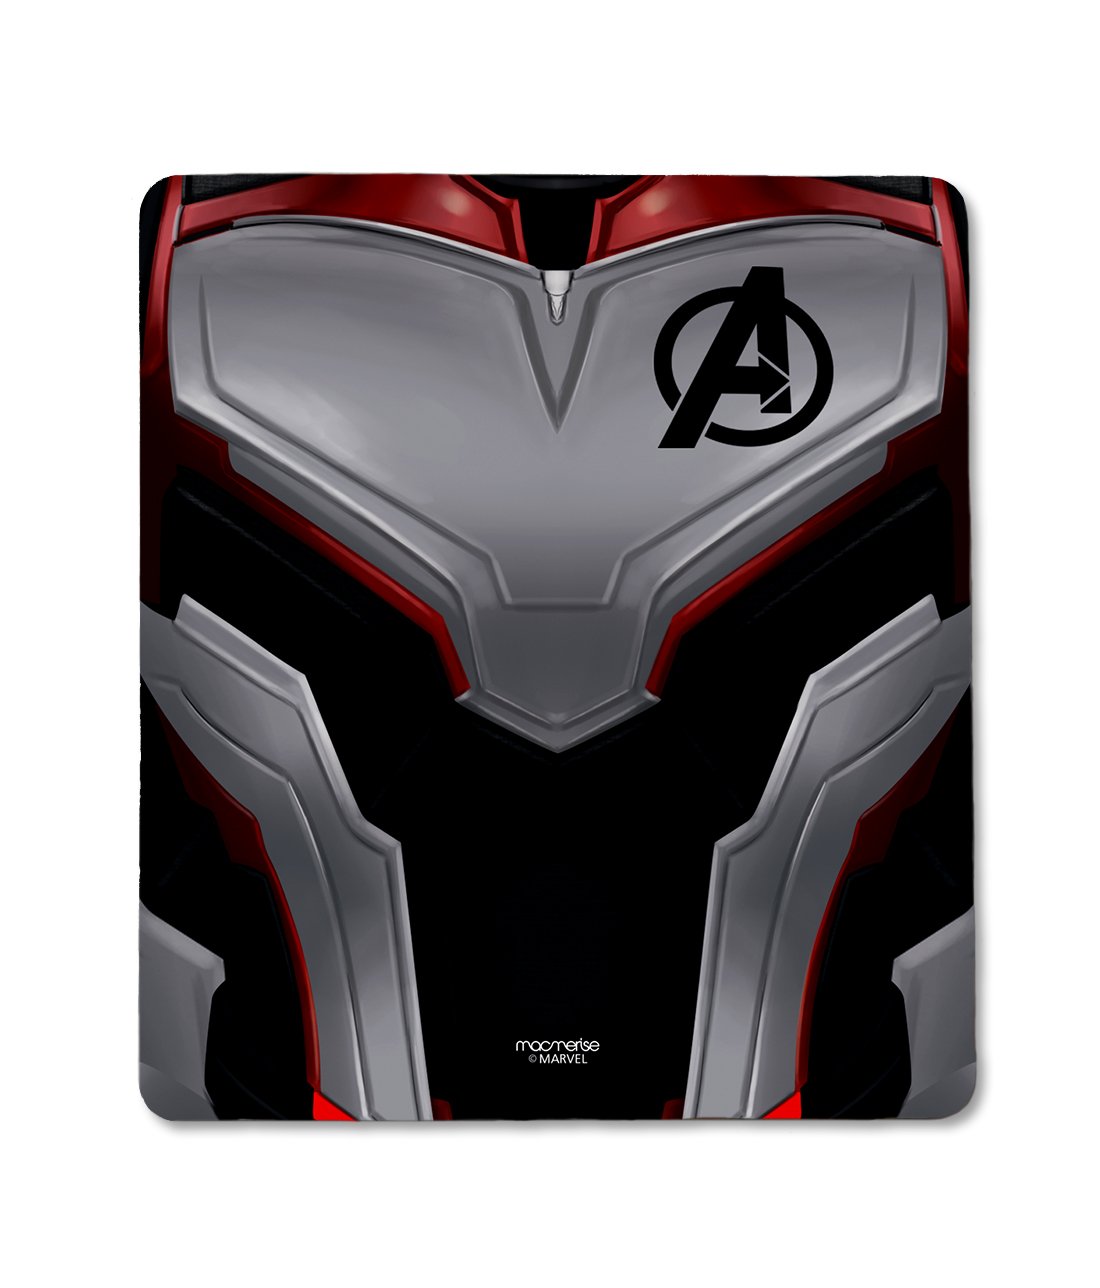 Avengers Endgame Suit - Mouse Pad by Macmerise -Macmerise - India - www.superherotoystore.com